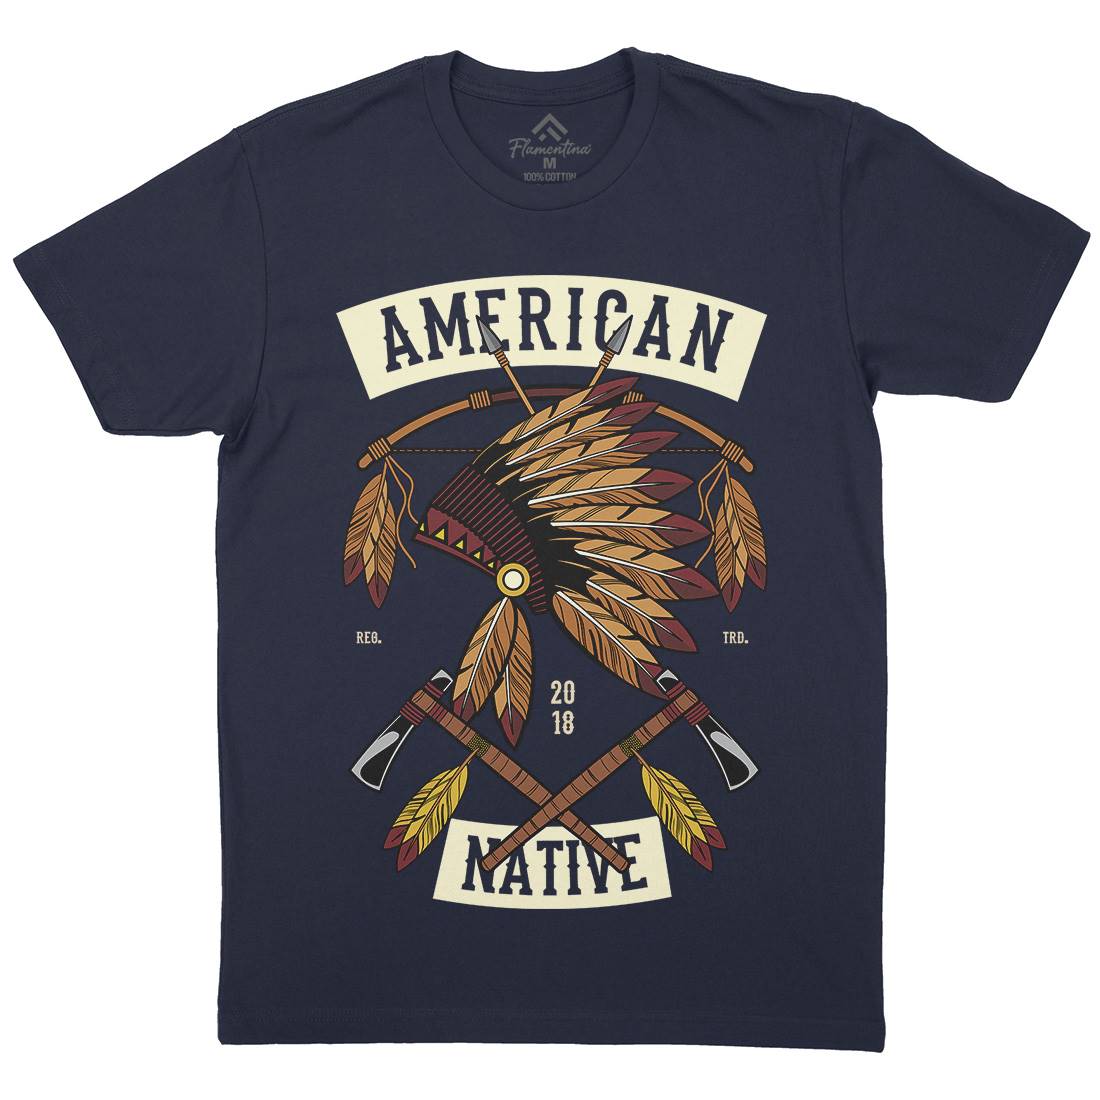 American Native Mens Crew Neck T-Shirt American C303